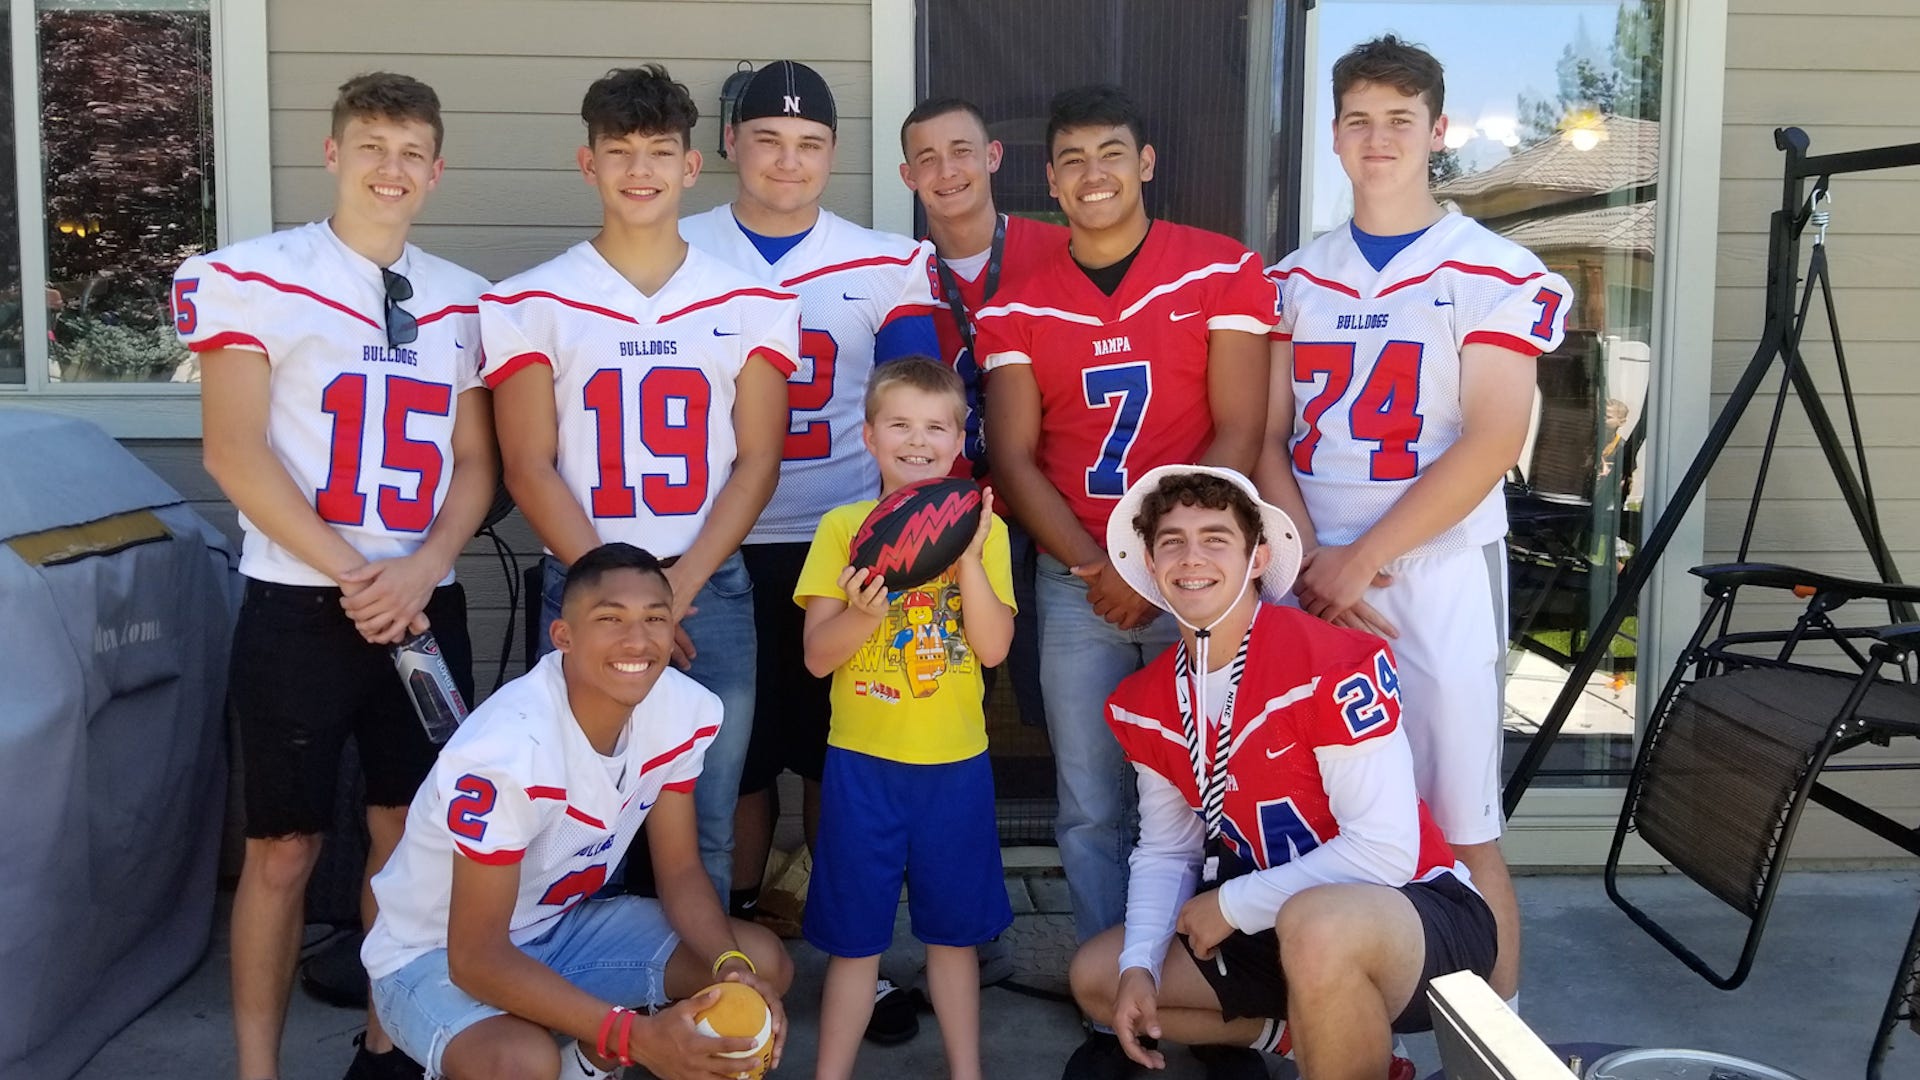 Good News: Football team's act of kindness saves boy's birthday